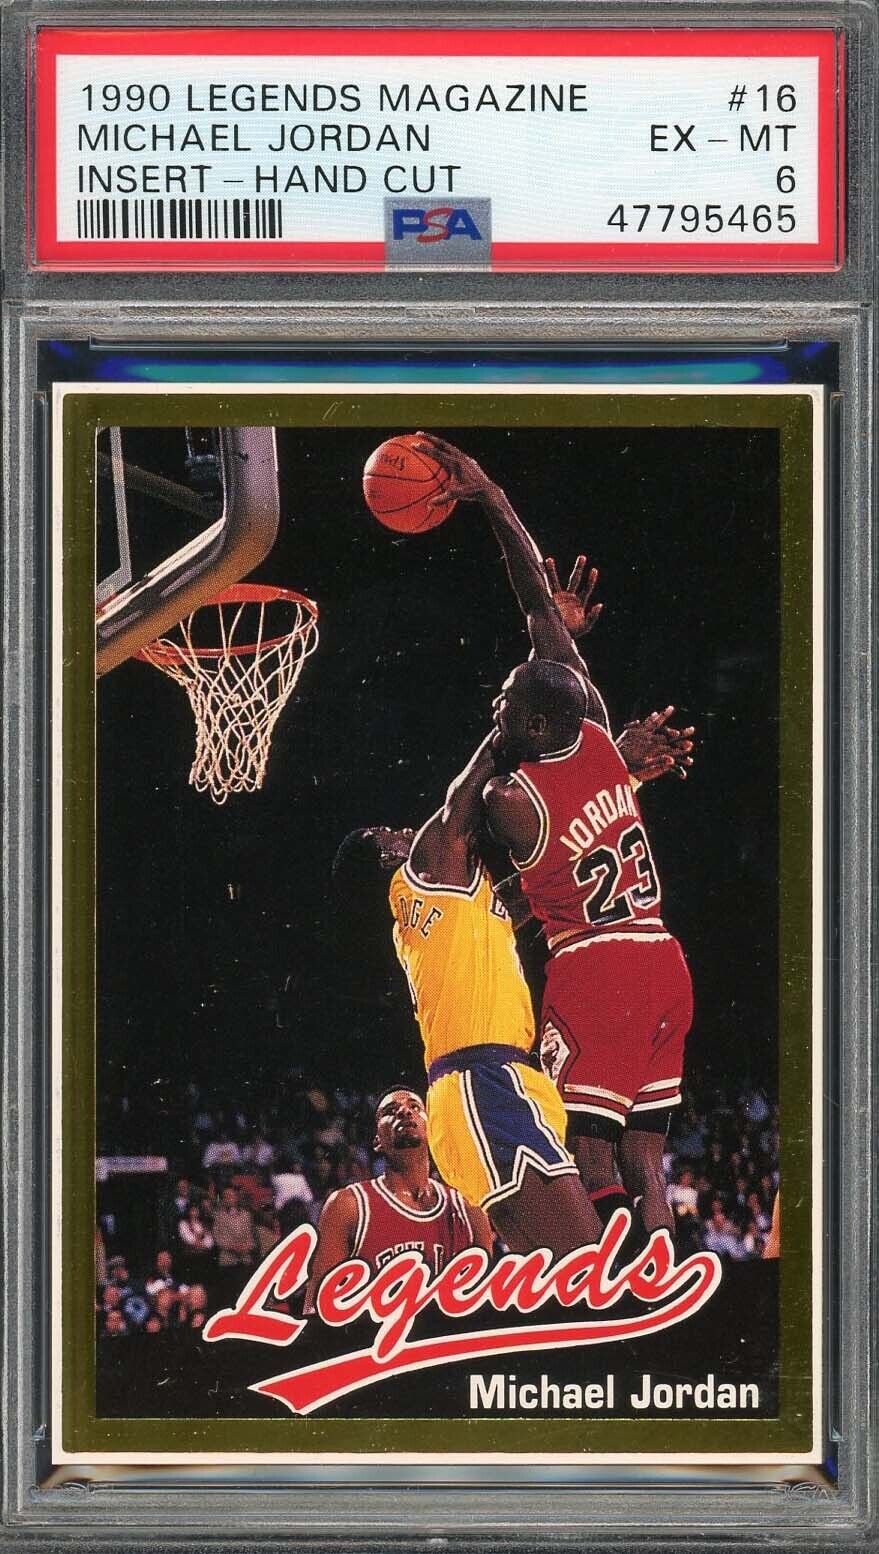 Michael Jordan 1990 Legends Magazine Insert Card #16 Graded PSA 6